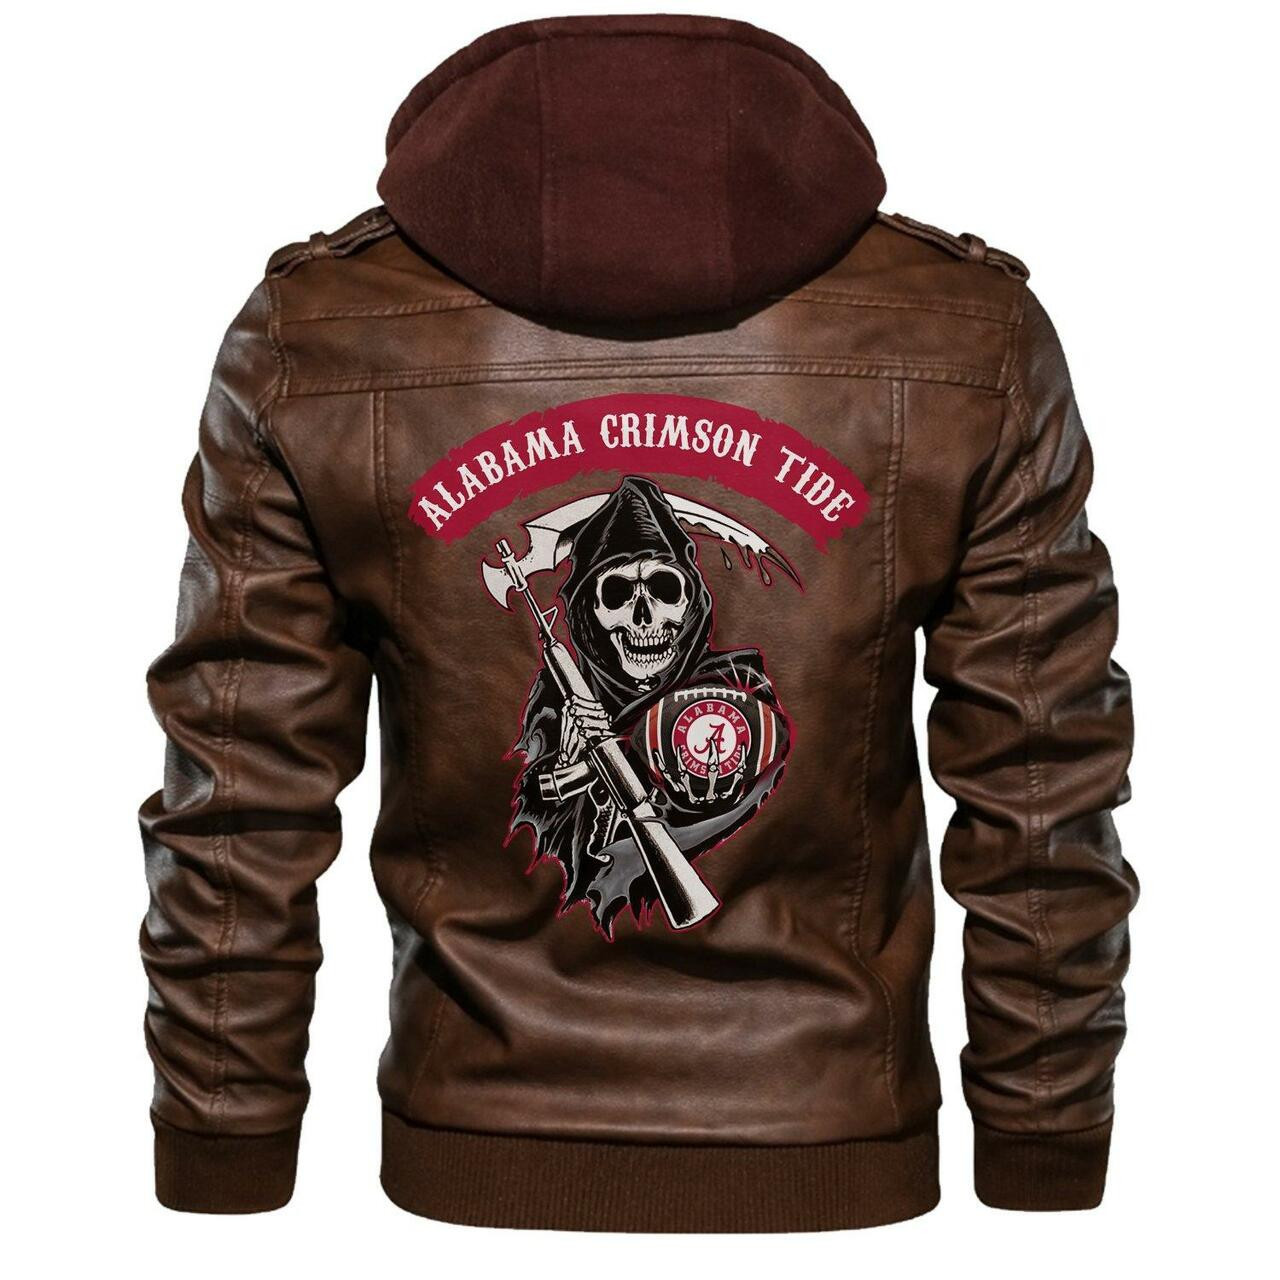 Top leather jacket Sells Best on Techcomshop 52